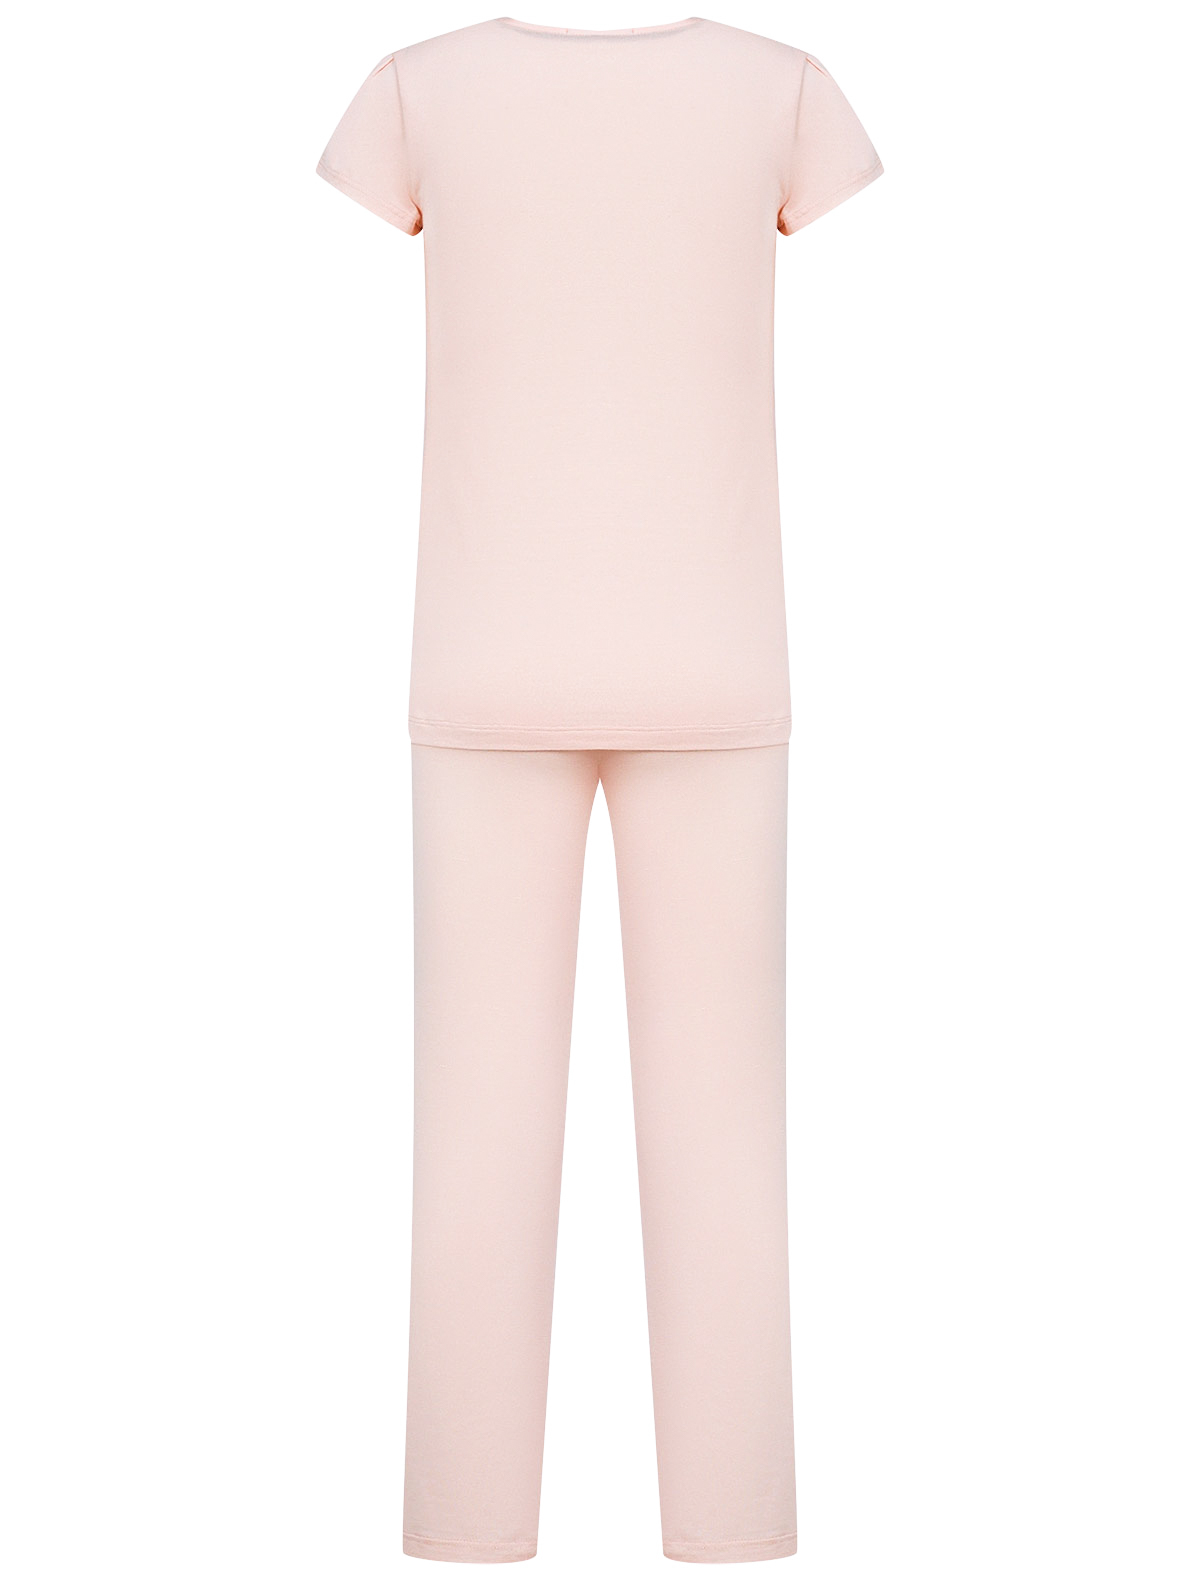 Пижама Sognatori 2196102, цвет розовый, размер 7 0214509070475 - фото 2